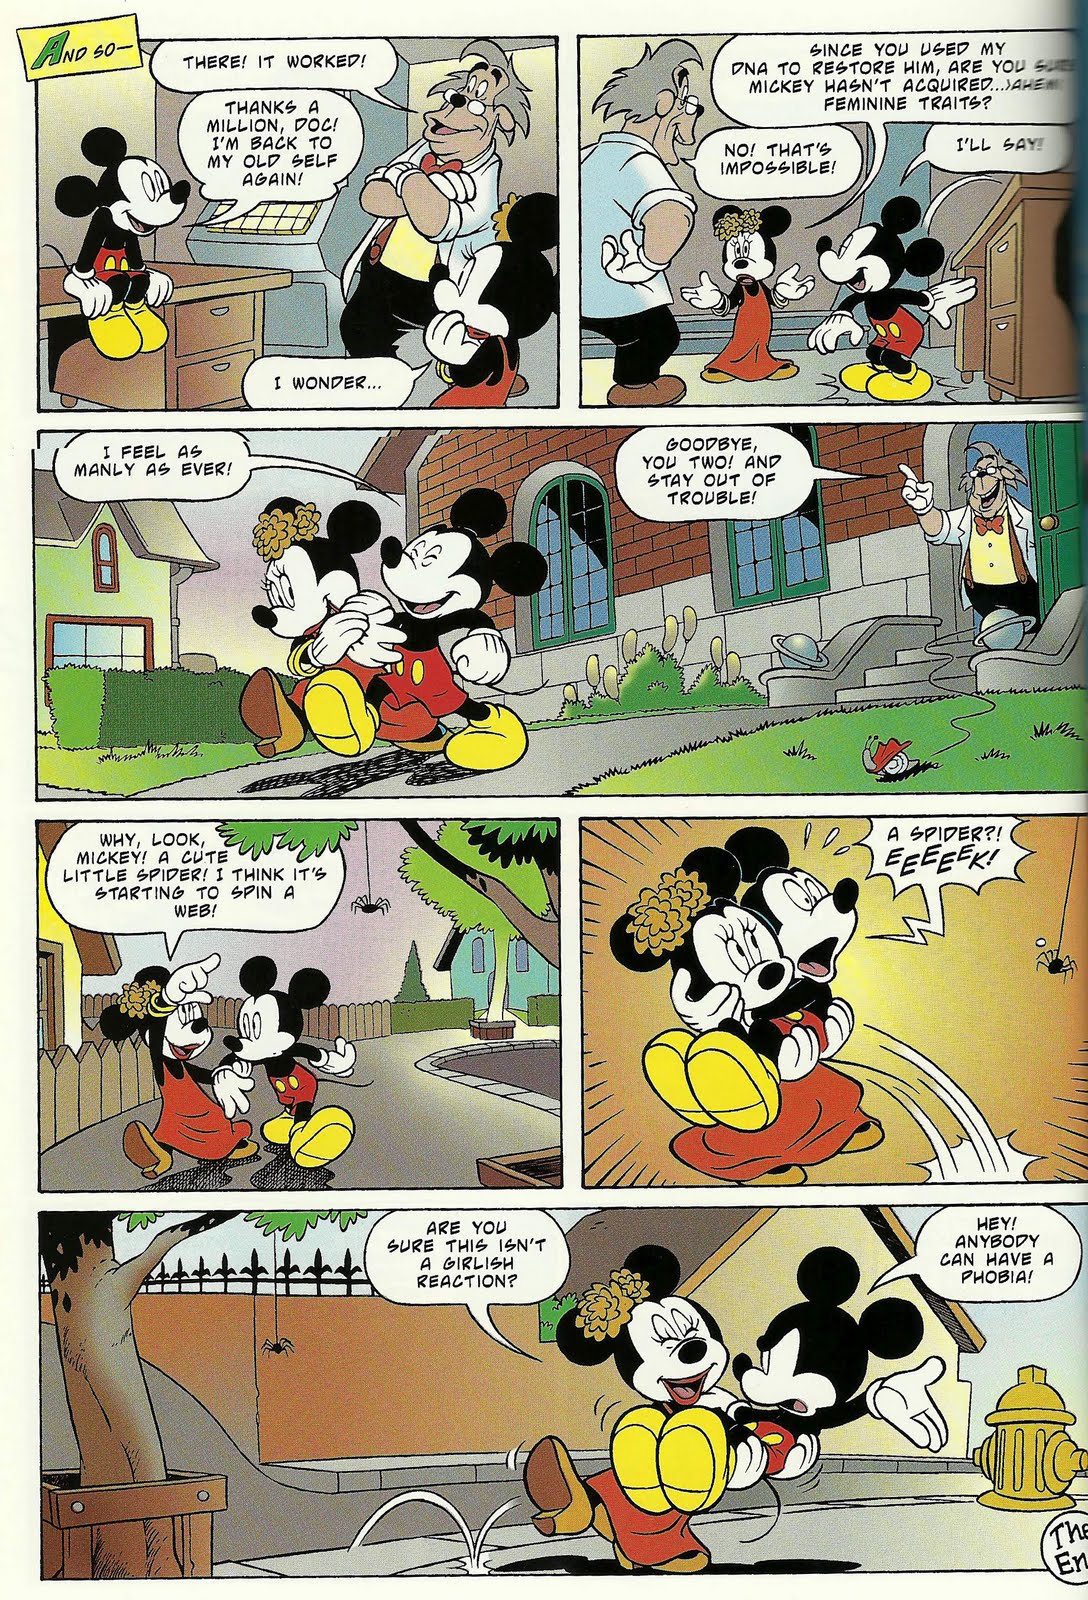 Comic Disney